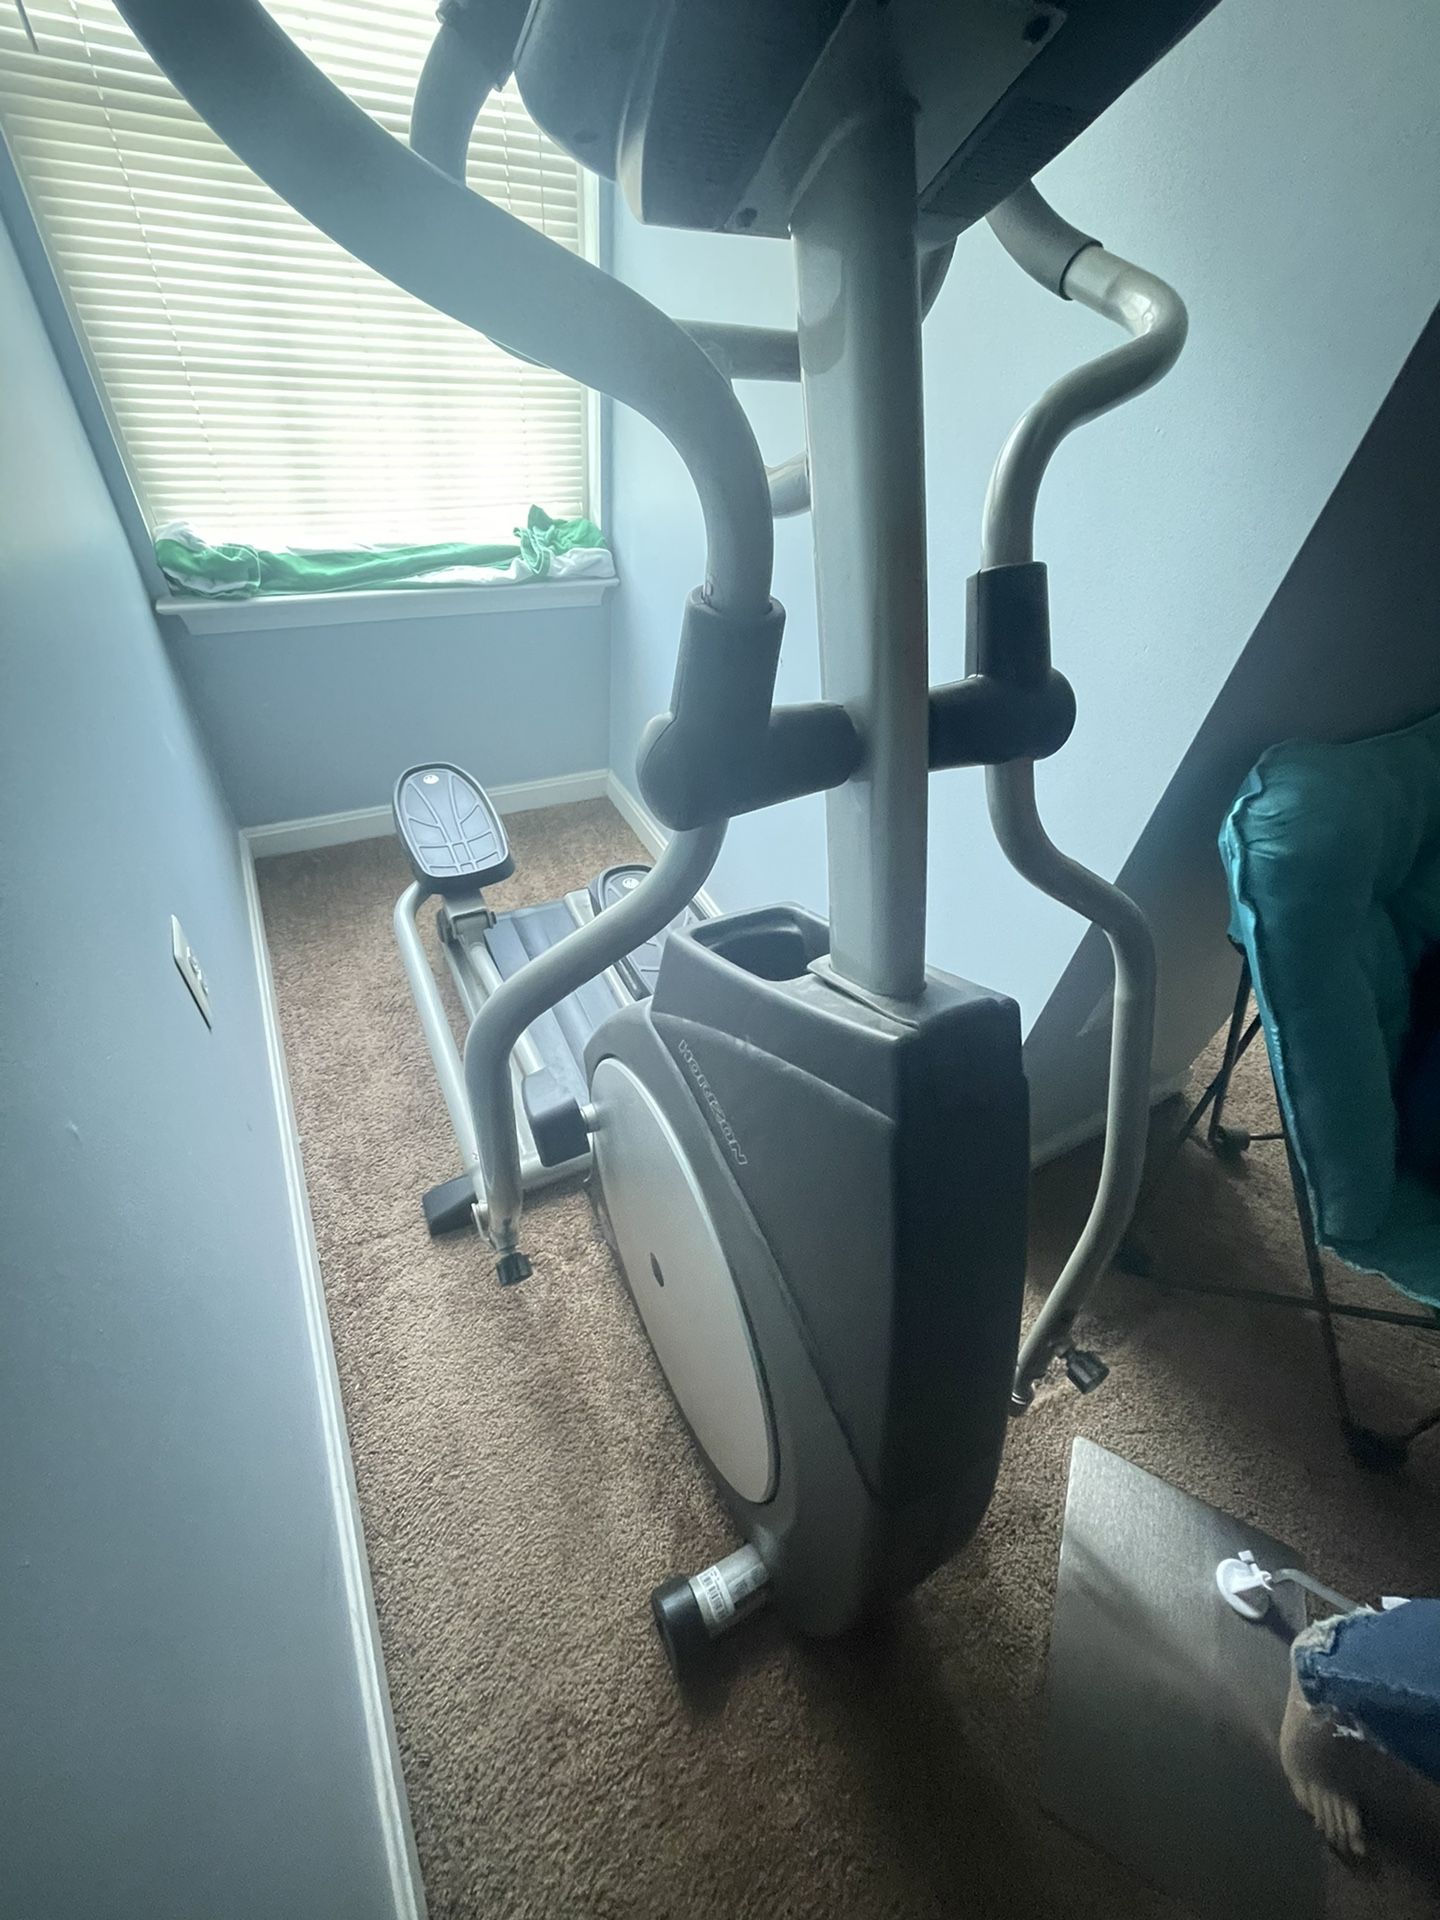 Exercise elliptical machine